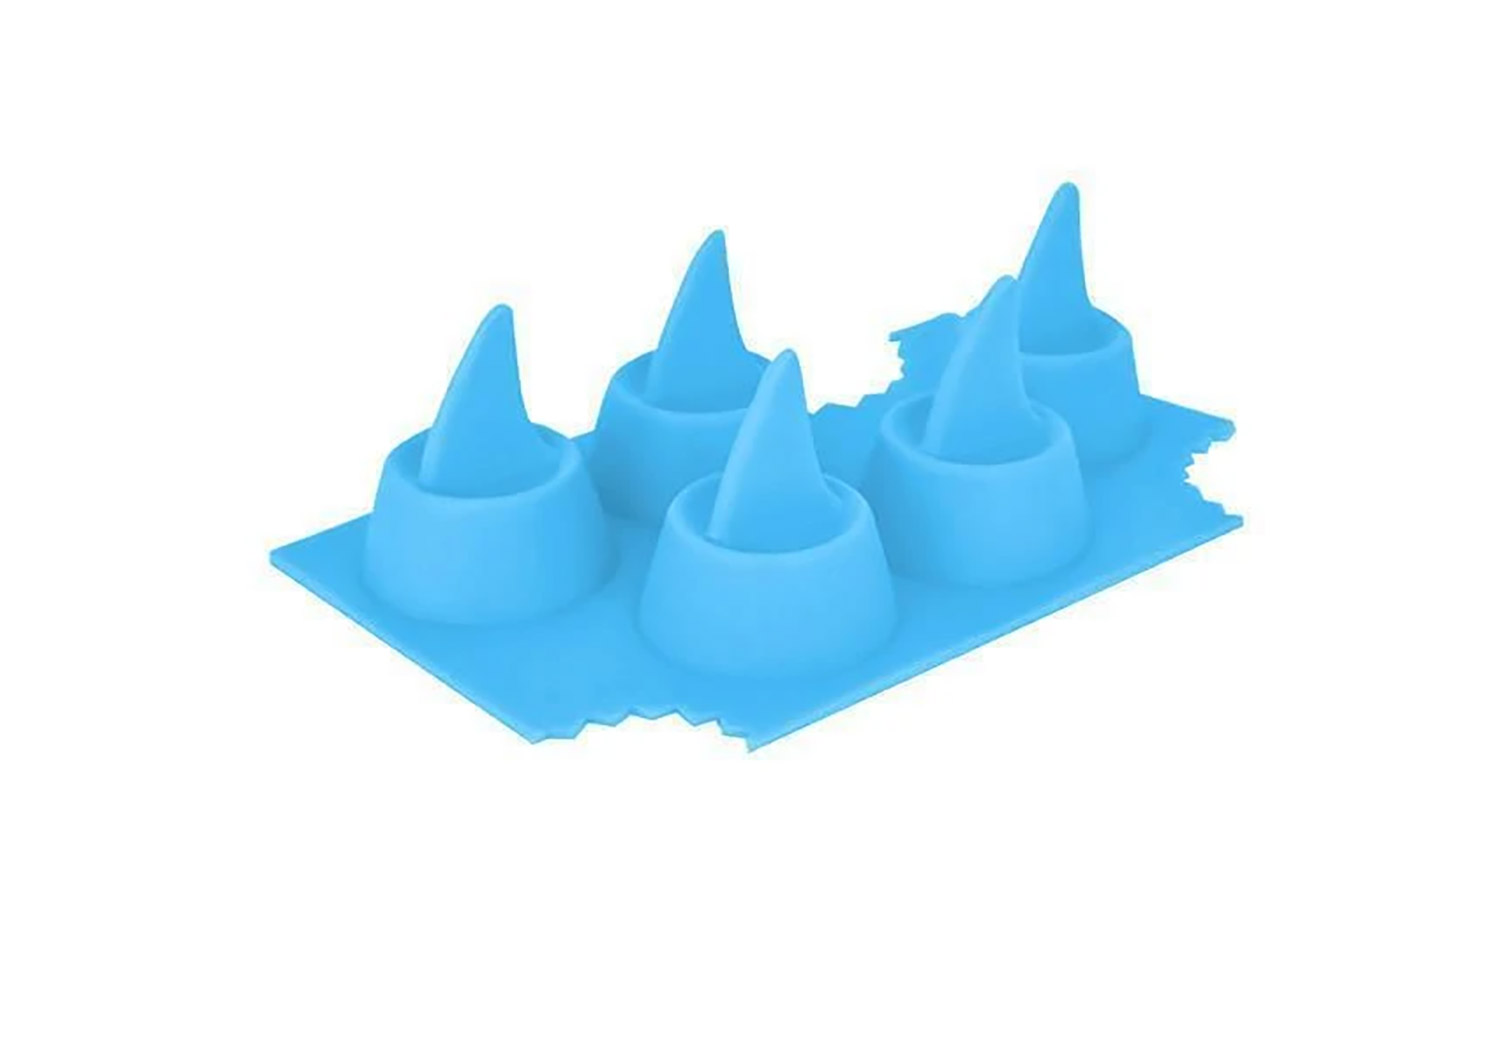 Shark Fin Ice Cube Tray - Shark fin shaped ice cubes